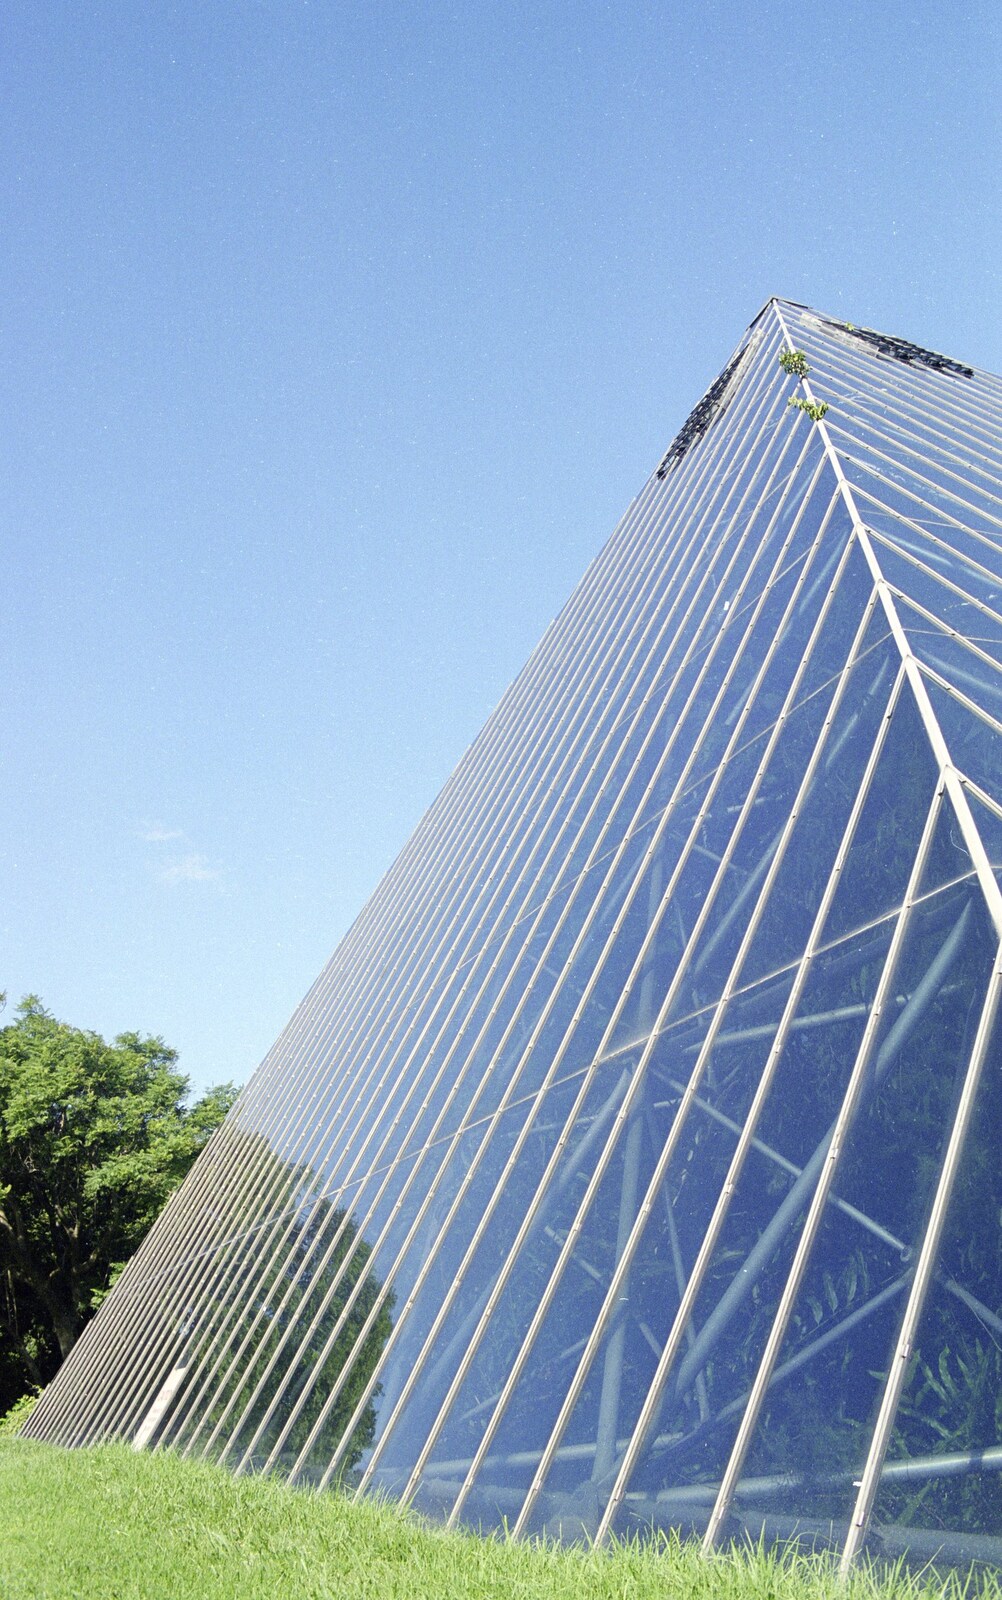 Pyramid of glass from Sydney Triathlon, Sydney, Australia - 16th April 2000